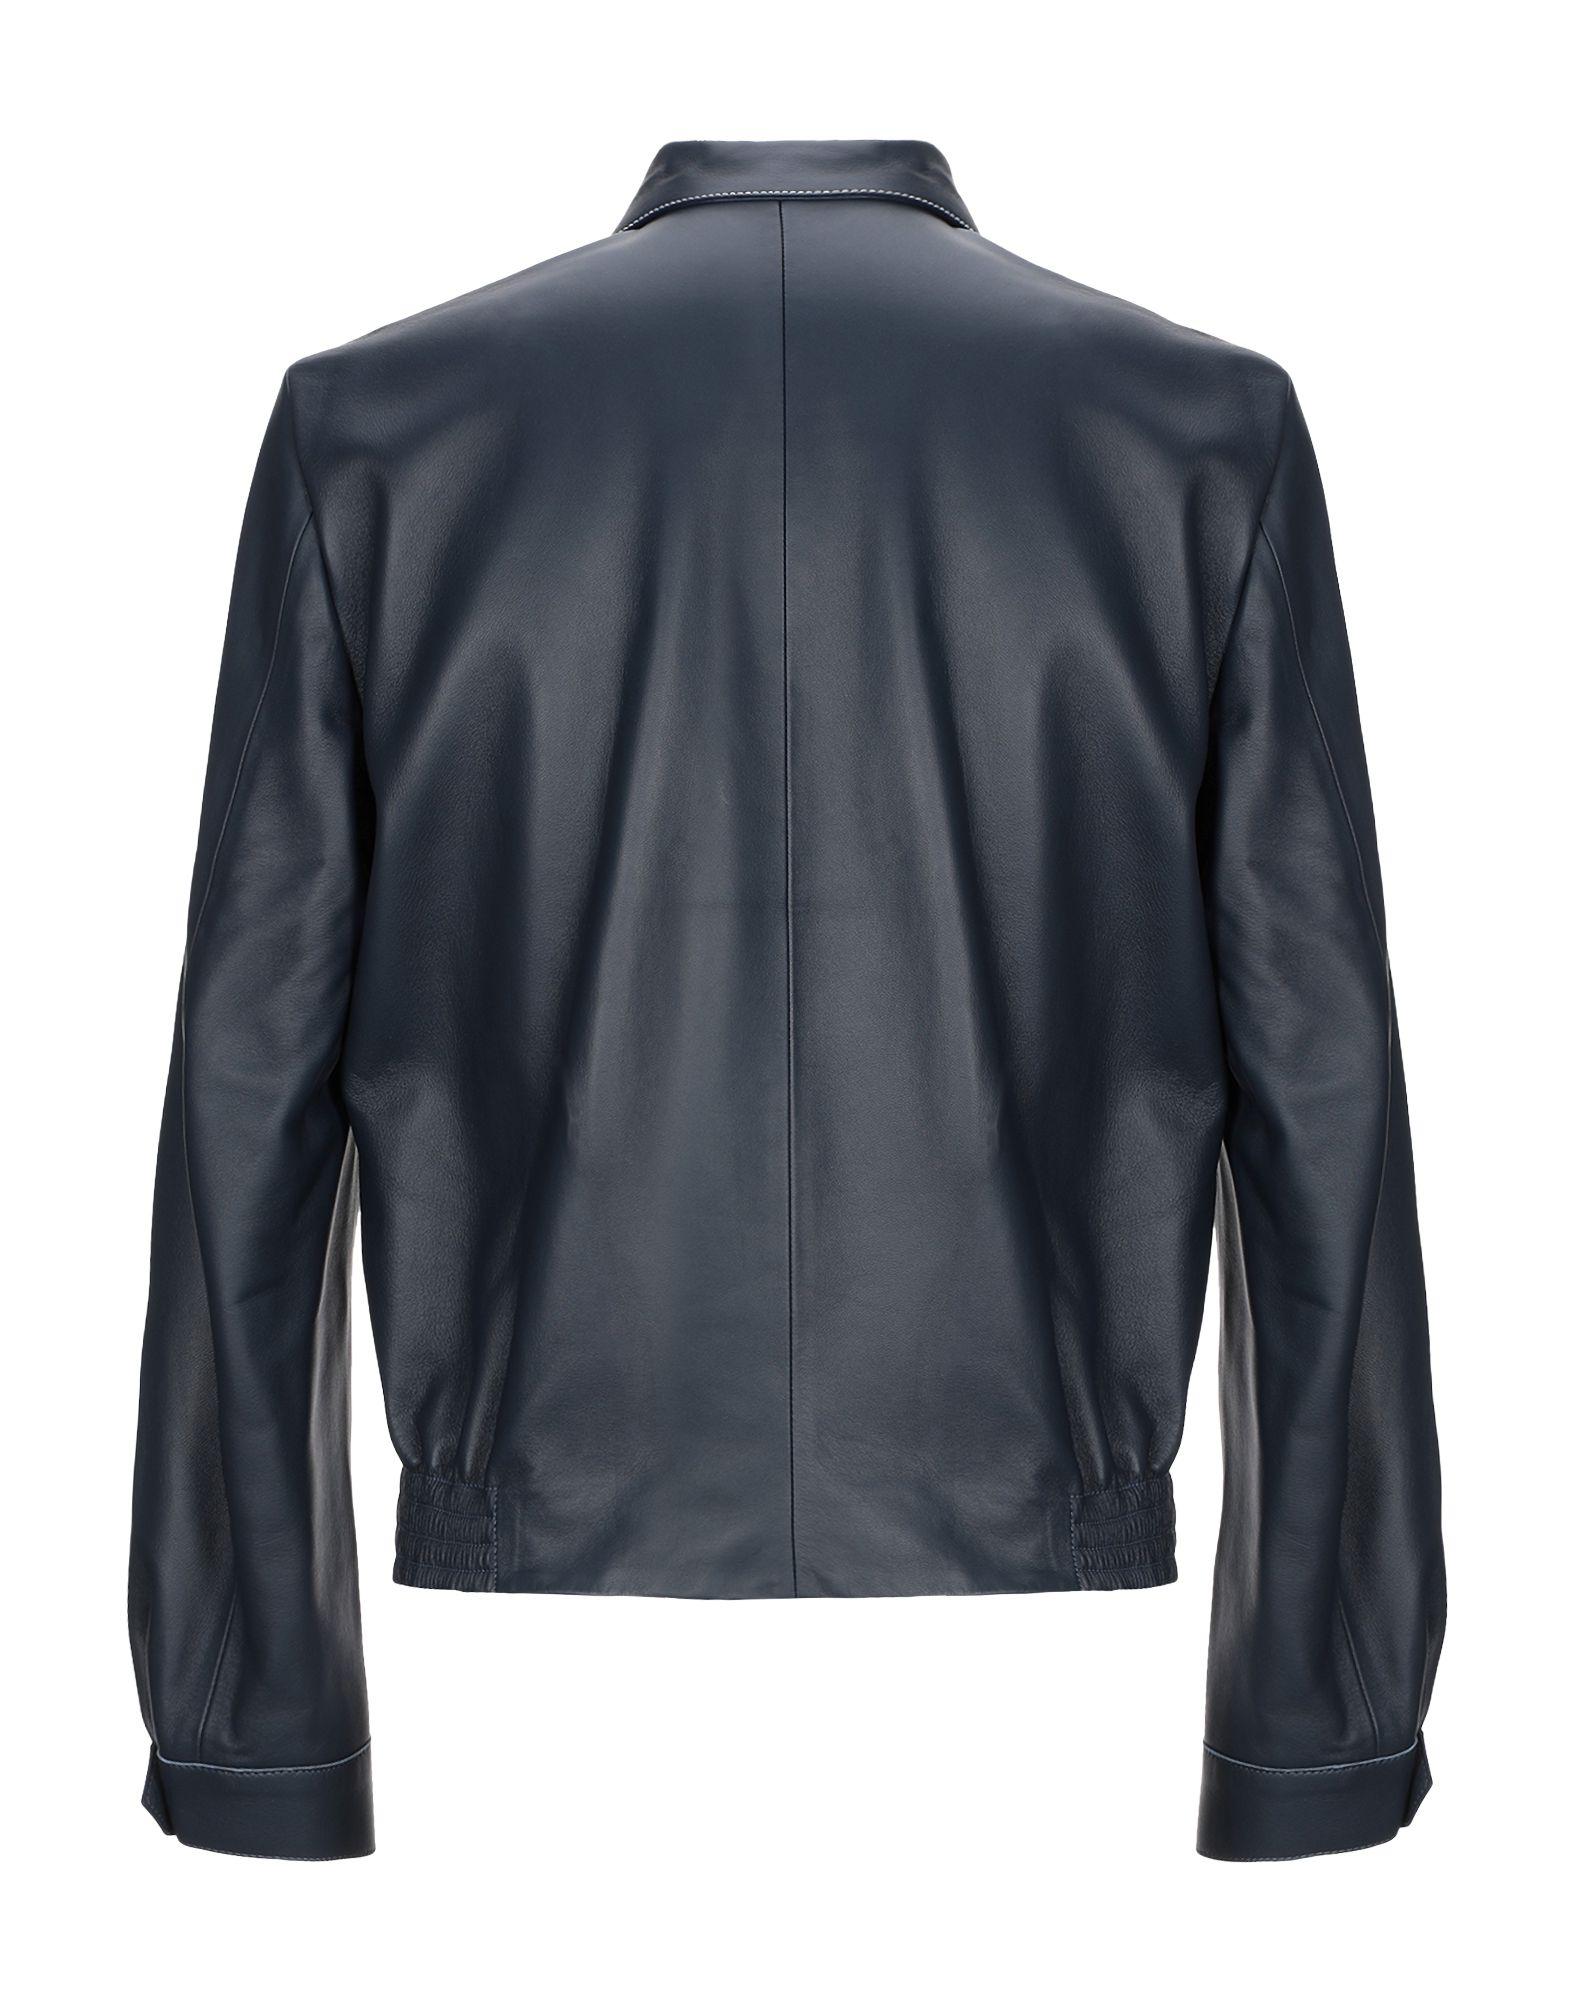 Loewe Leather Jacket in Dark Blue (Blue) for Men - Lyst